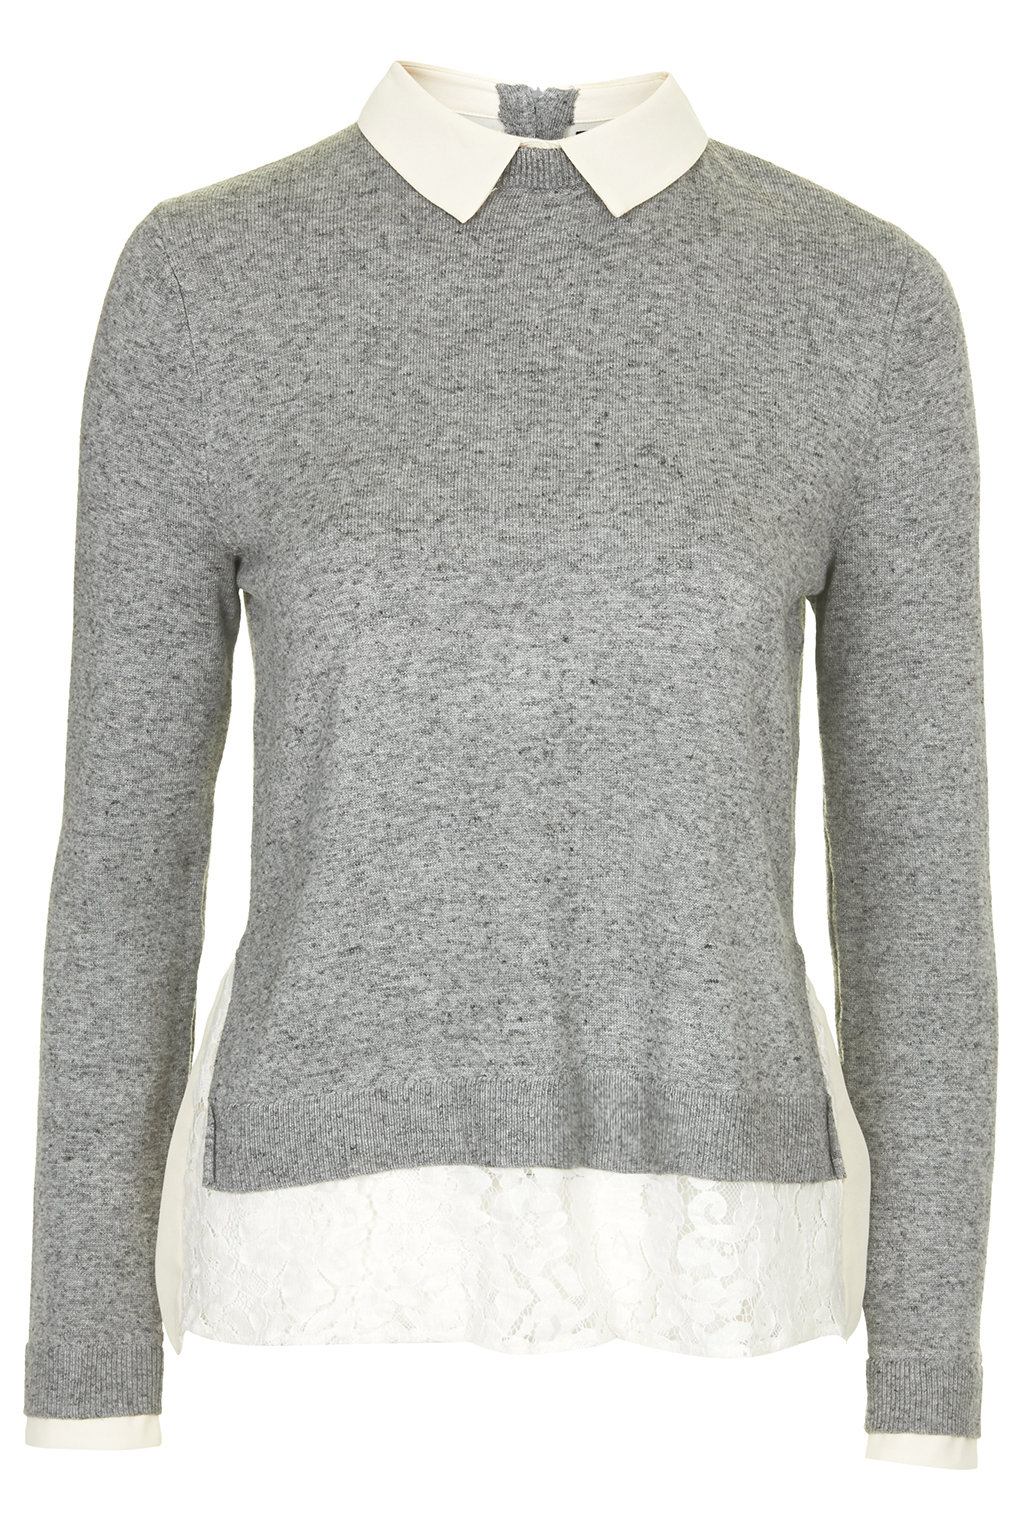 Topshop Hybrid Shirt Jumper in Gray (Grey Marl) | Lyst